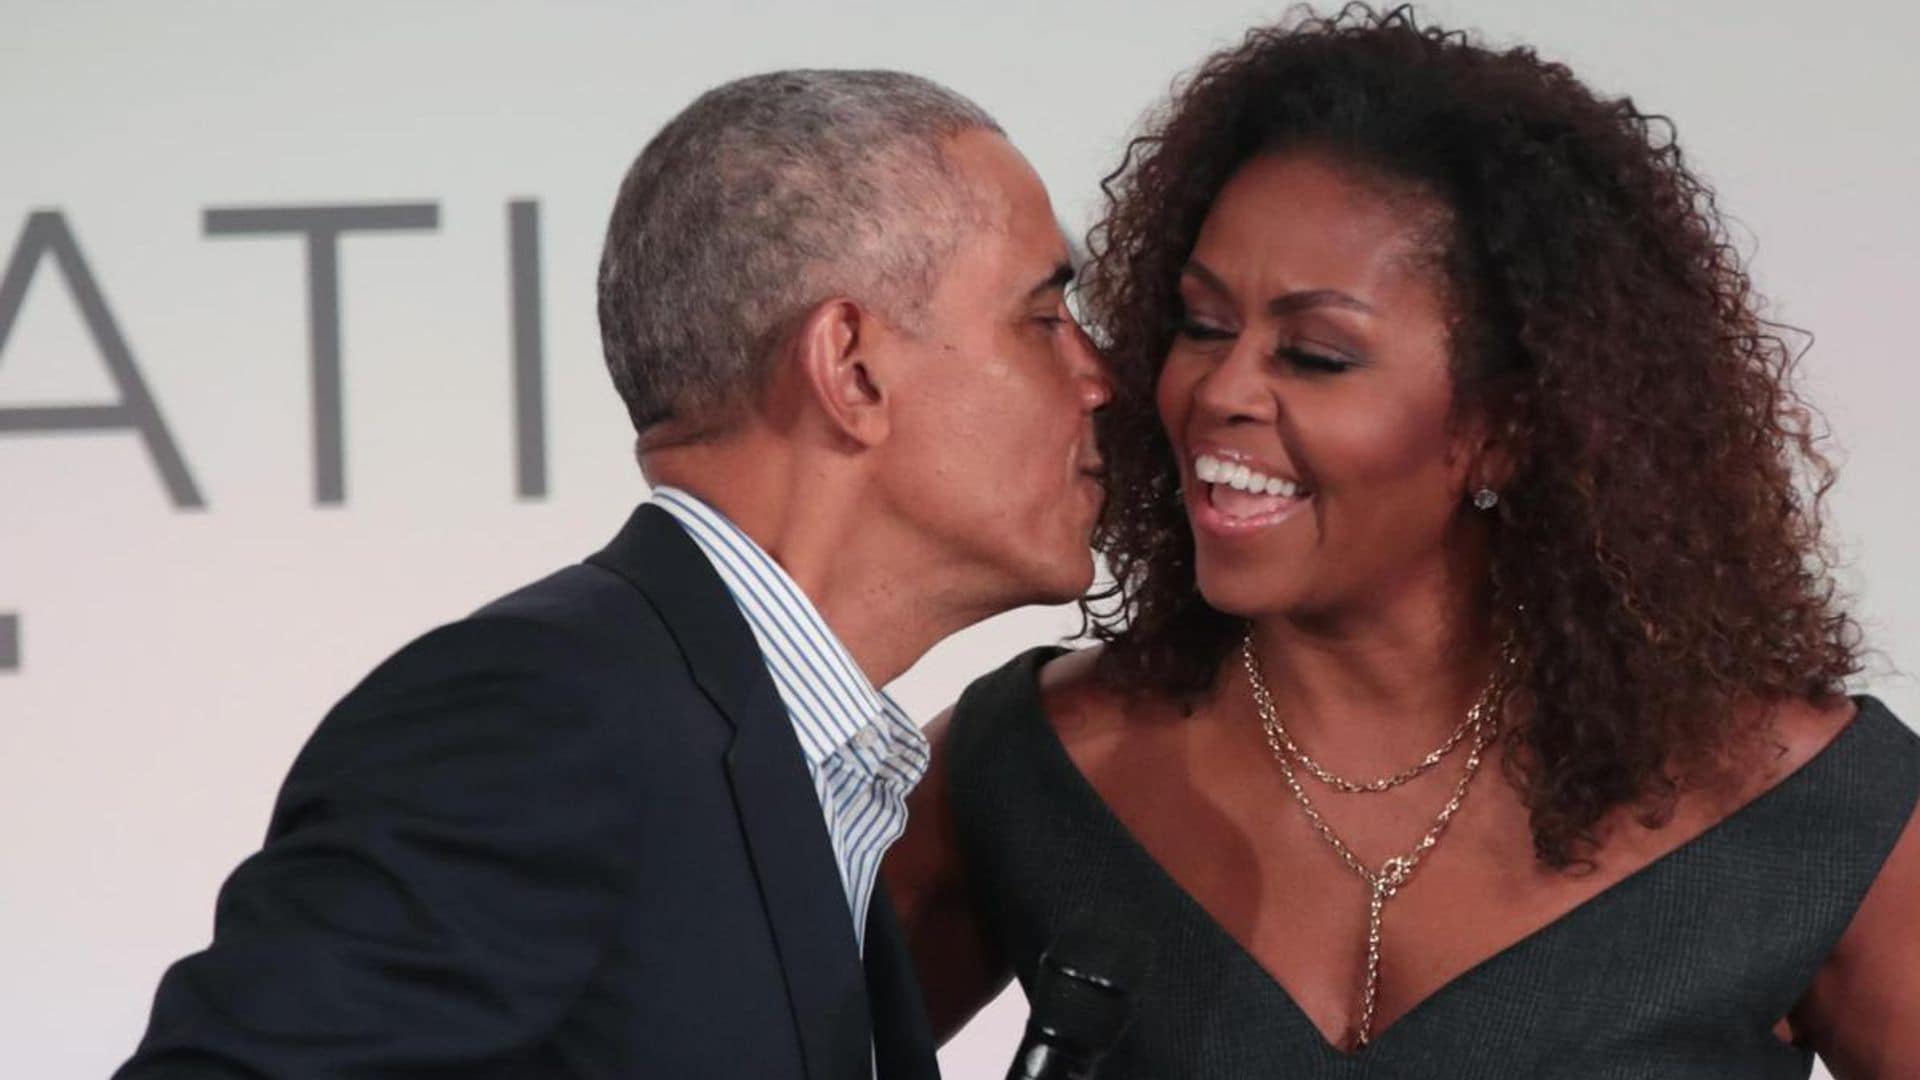 Barack Obama calls wife Michelle Obama his ‘better half’ in adorable birthday tribute